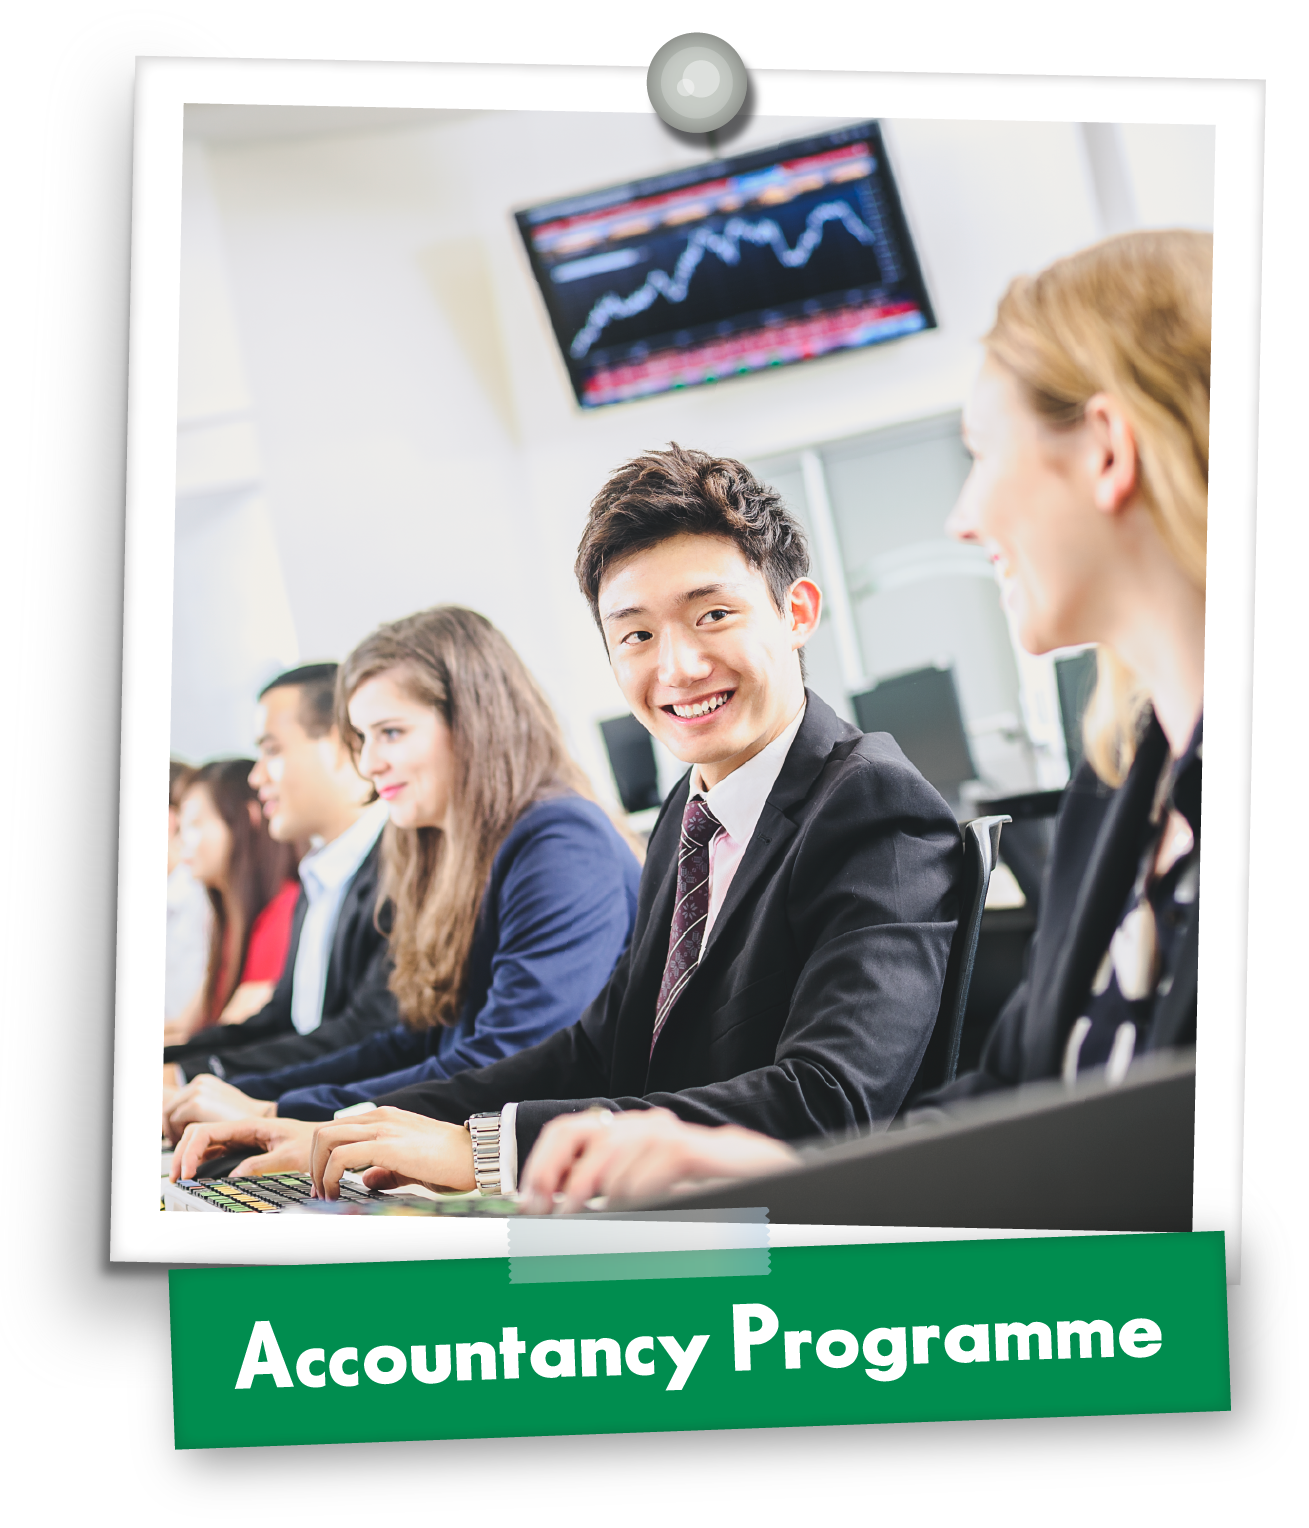 Accountancy Programme